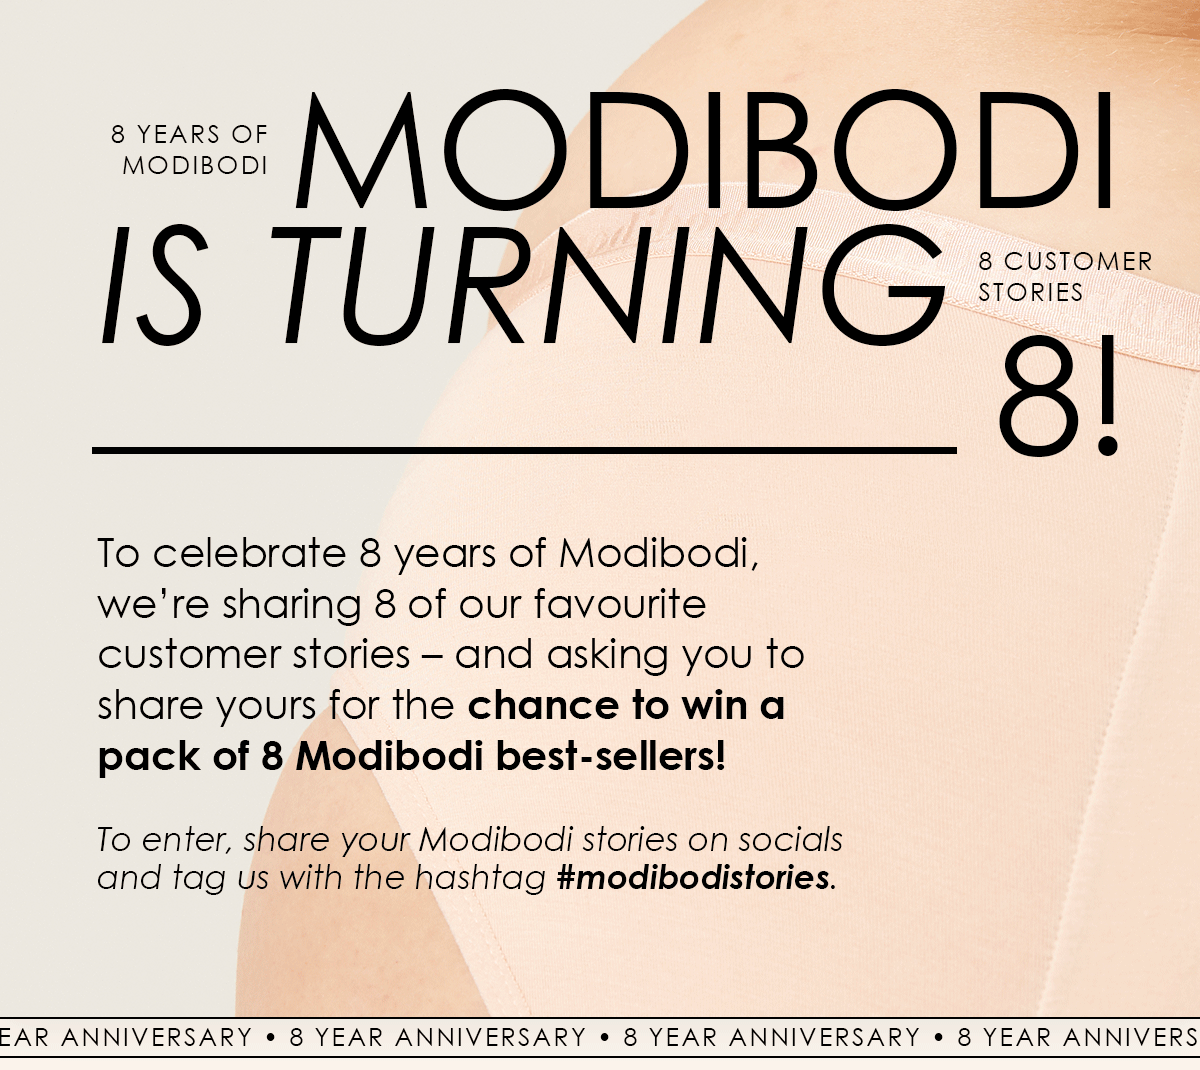 modibodi EU: Modibodi is turning 8!